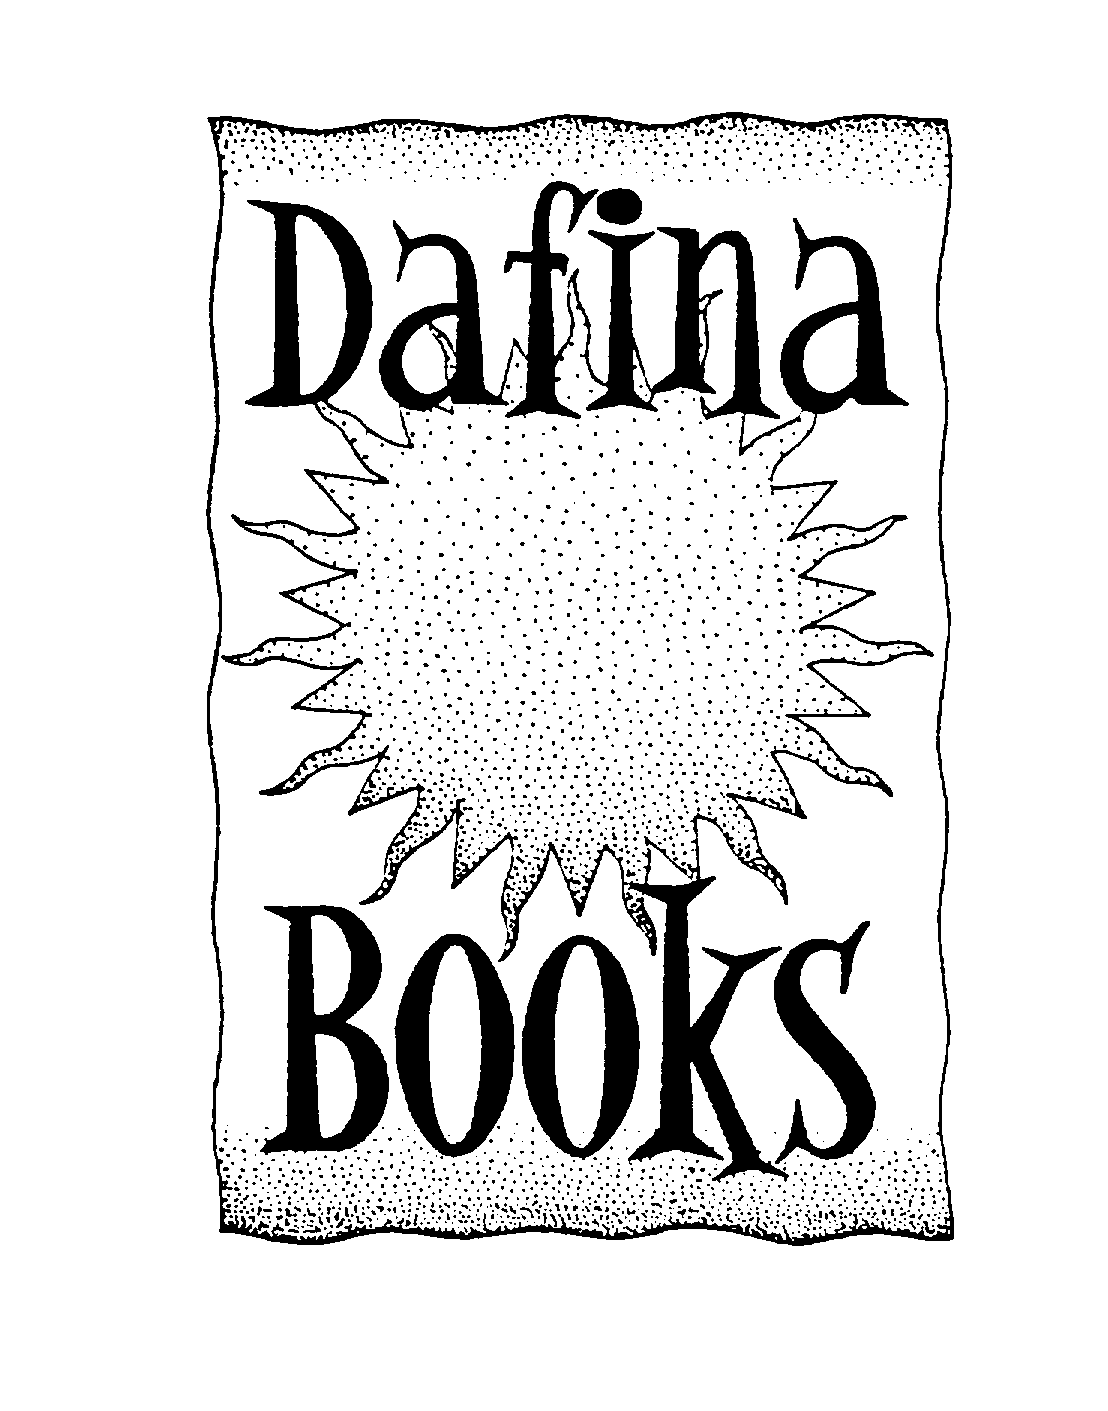  DAFINA BOOKS